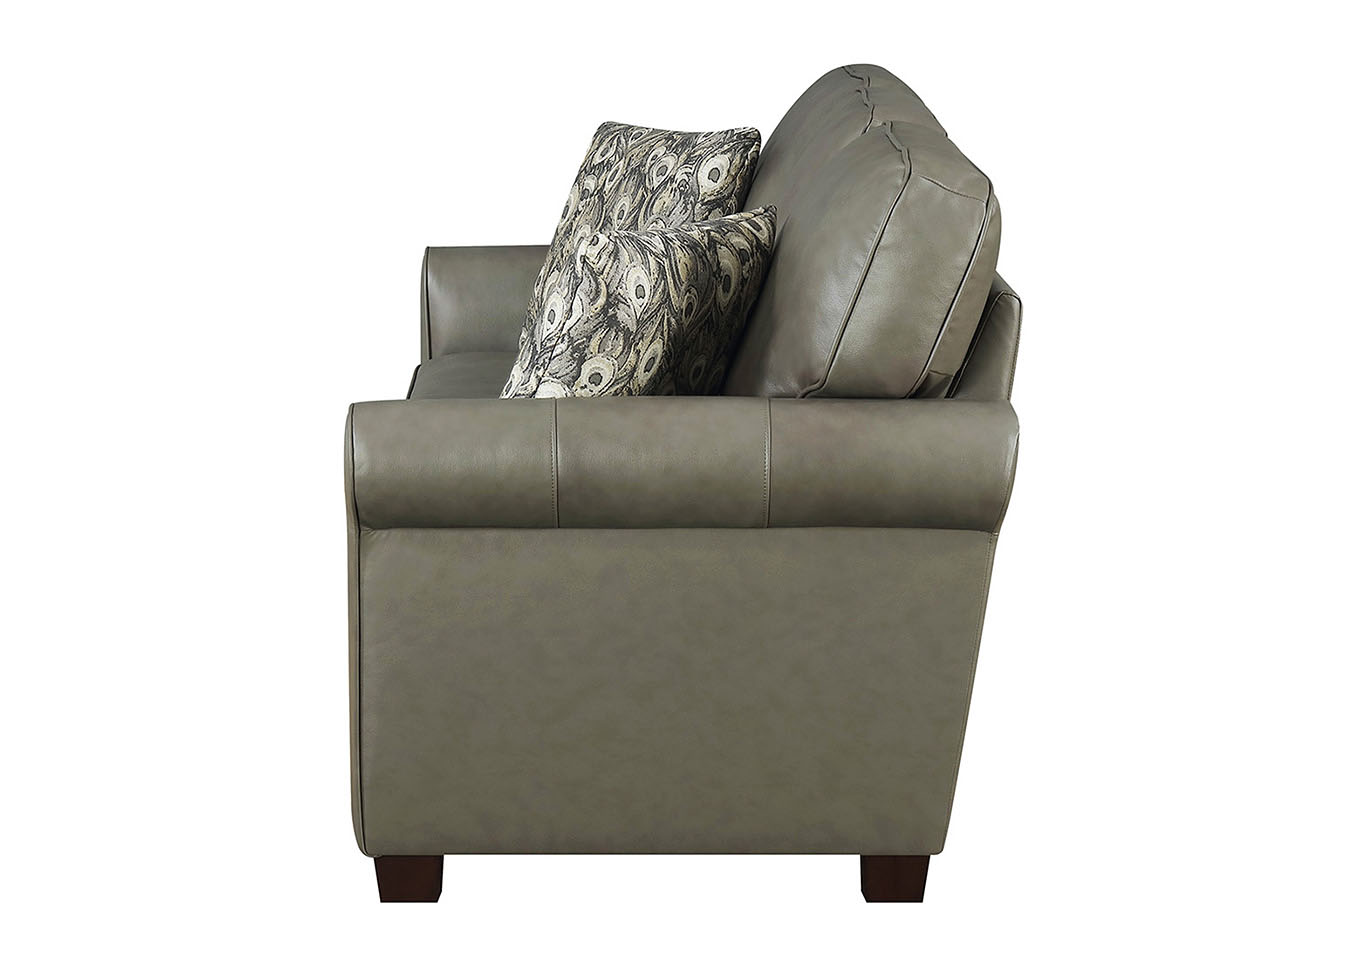 April Gray Leather Match Stationary Sofa,Taba Home Furnishings